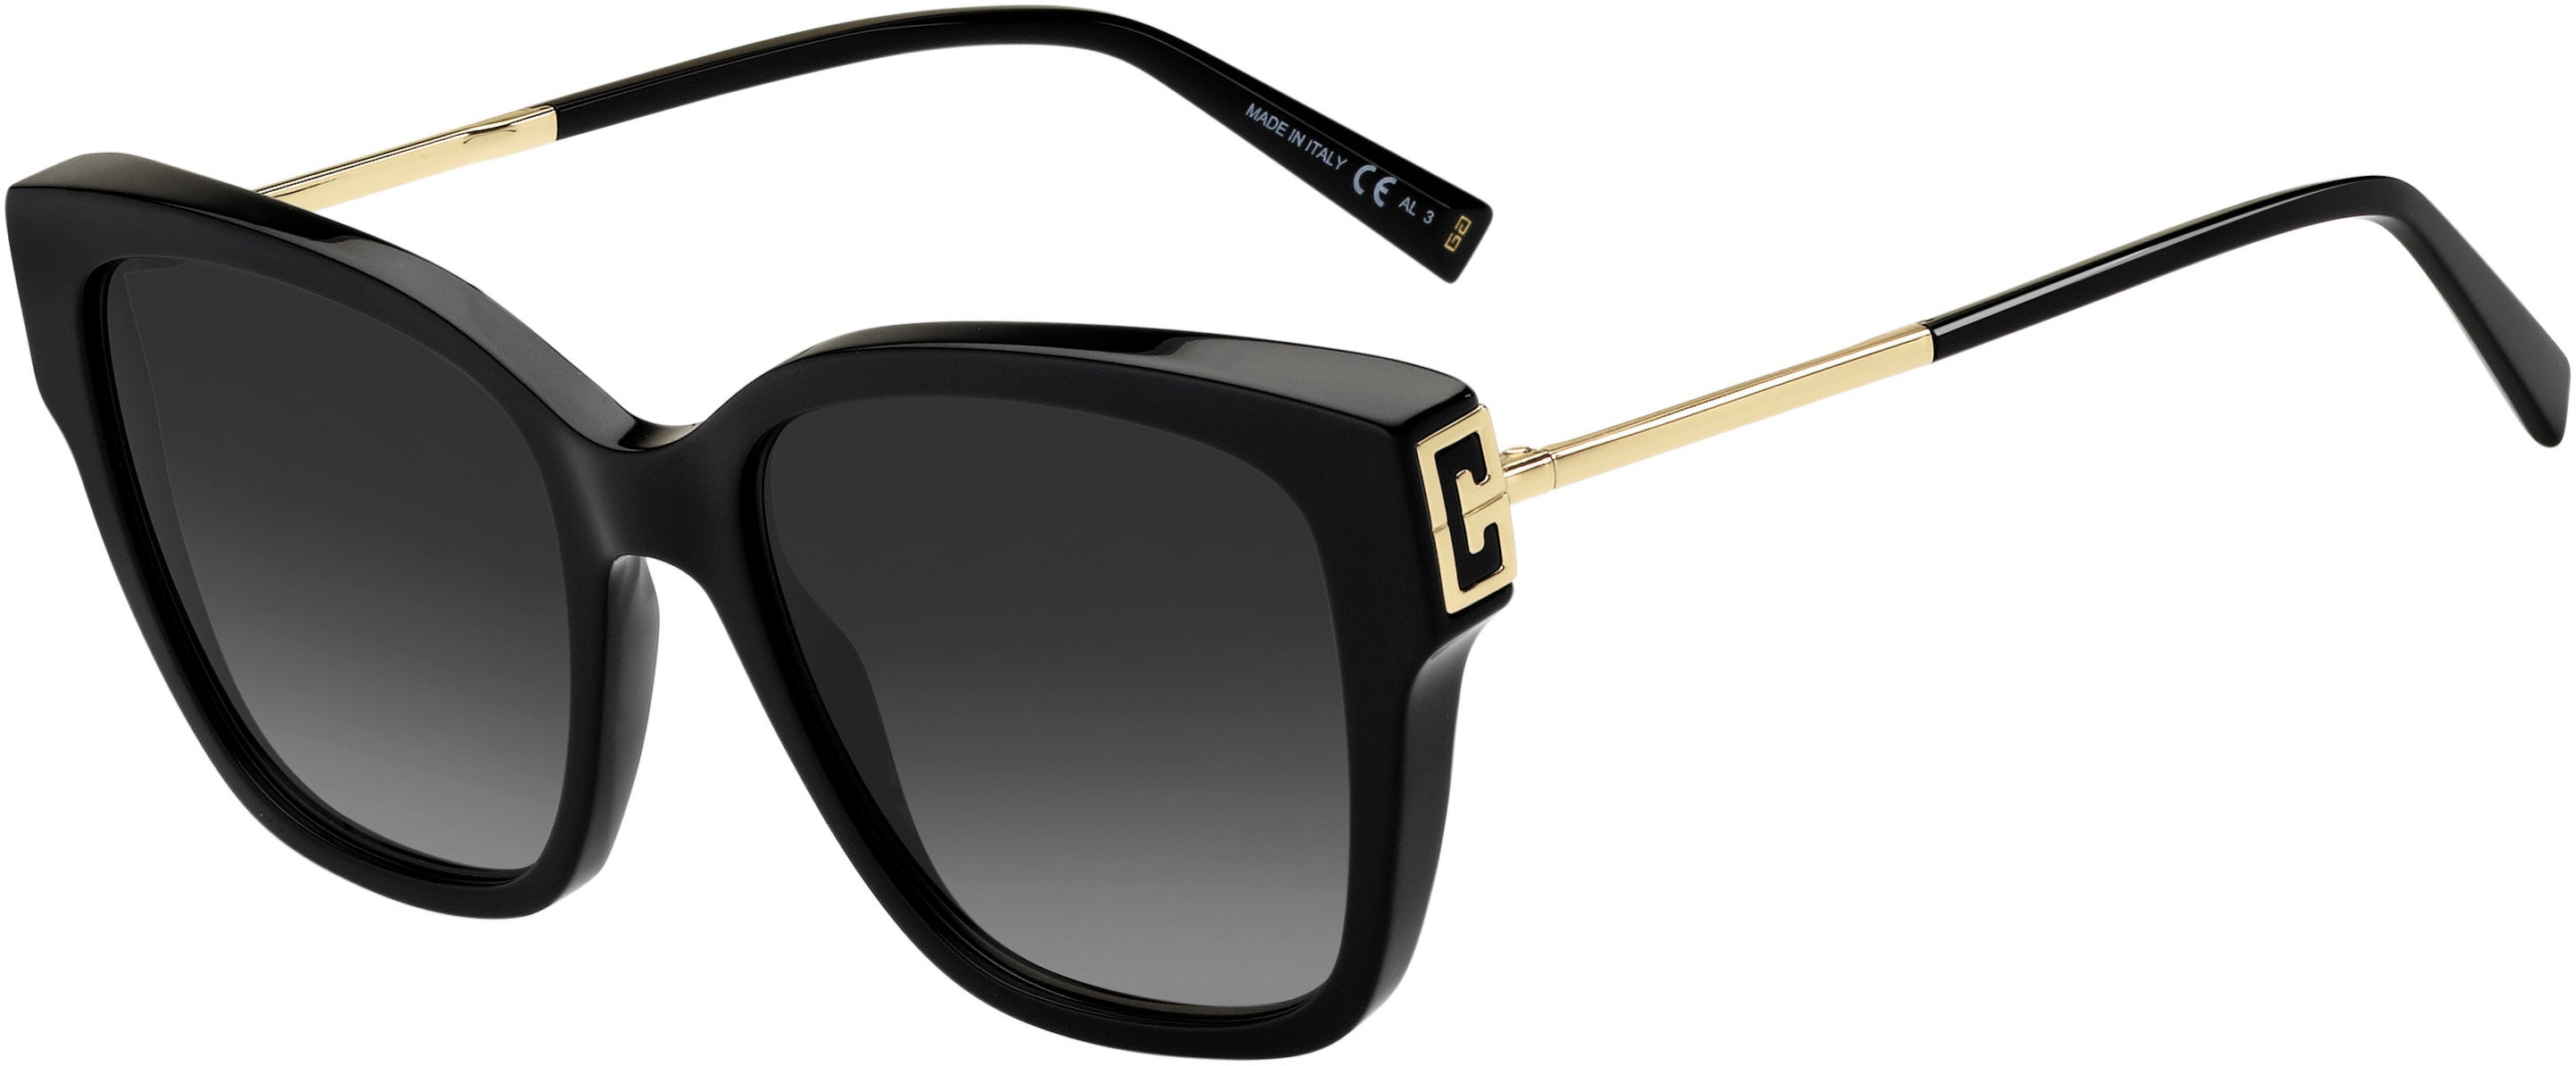  Givenchy 7191/S Square Sunglasses 0807-0807  Black (9O Dark Gray Gradient)